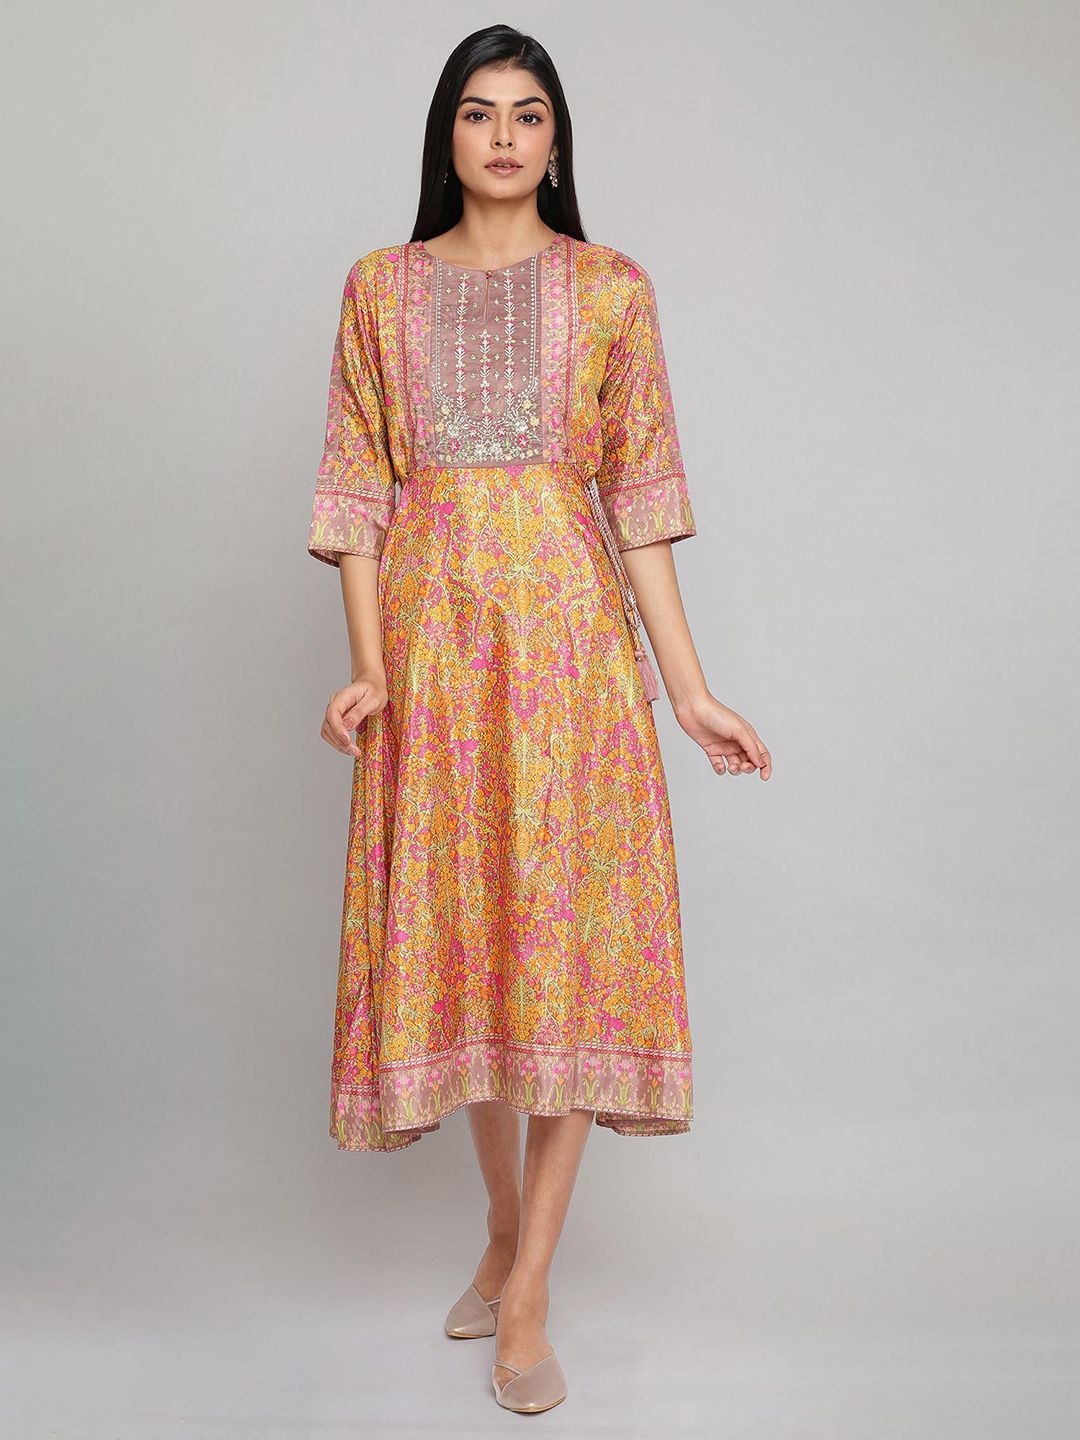 W Yellow & Pink Ethnic Motifs Ethnic A-Line Midi Dress Price in India